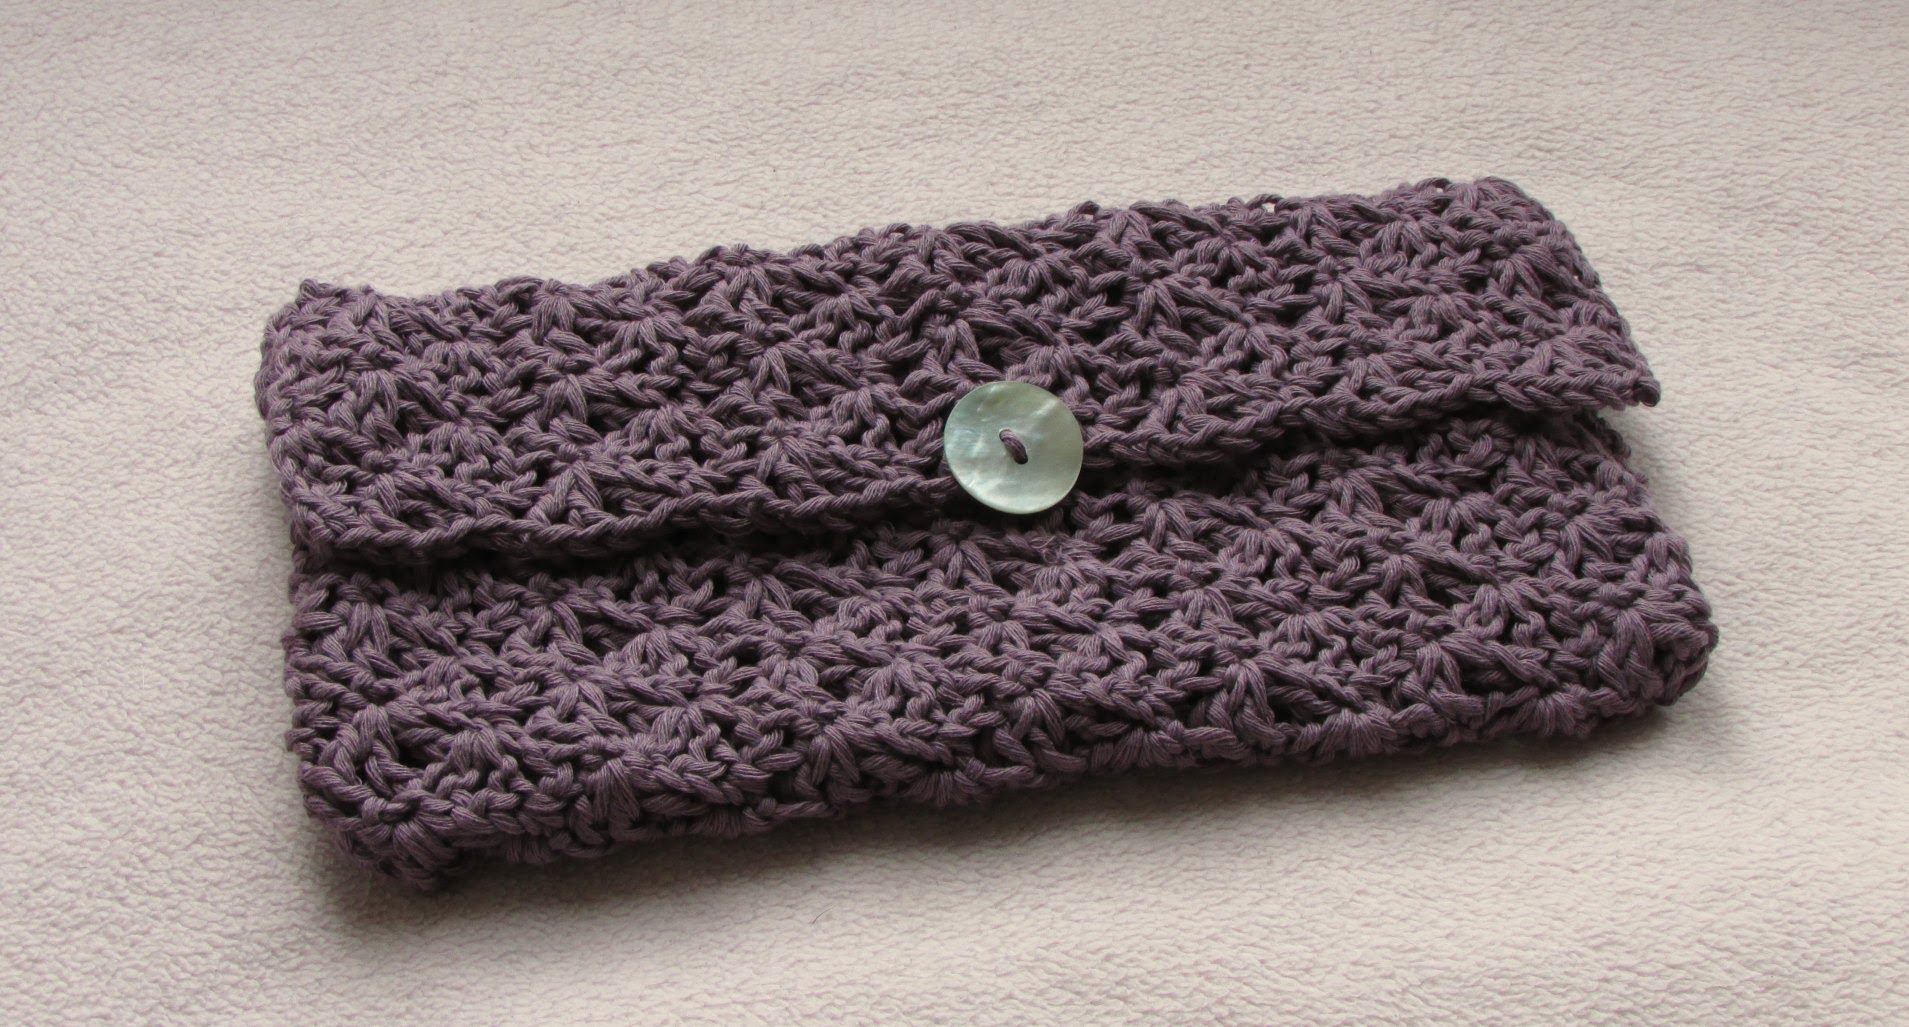 crochet purse patterns easy crochet purse tutorial - how to crochet a clutch bag / purse yjvgvhu